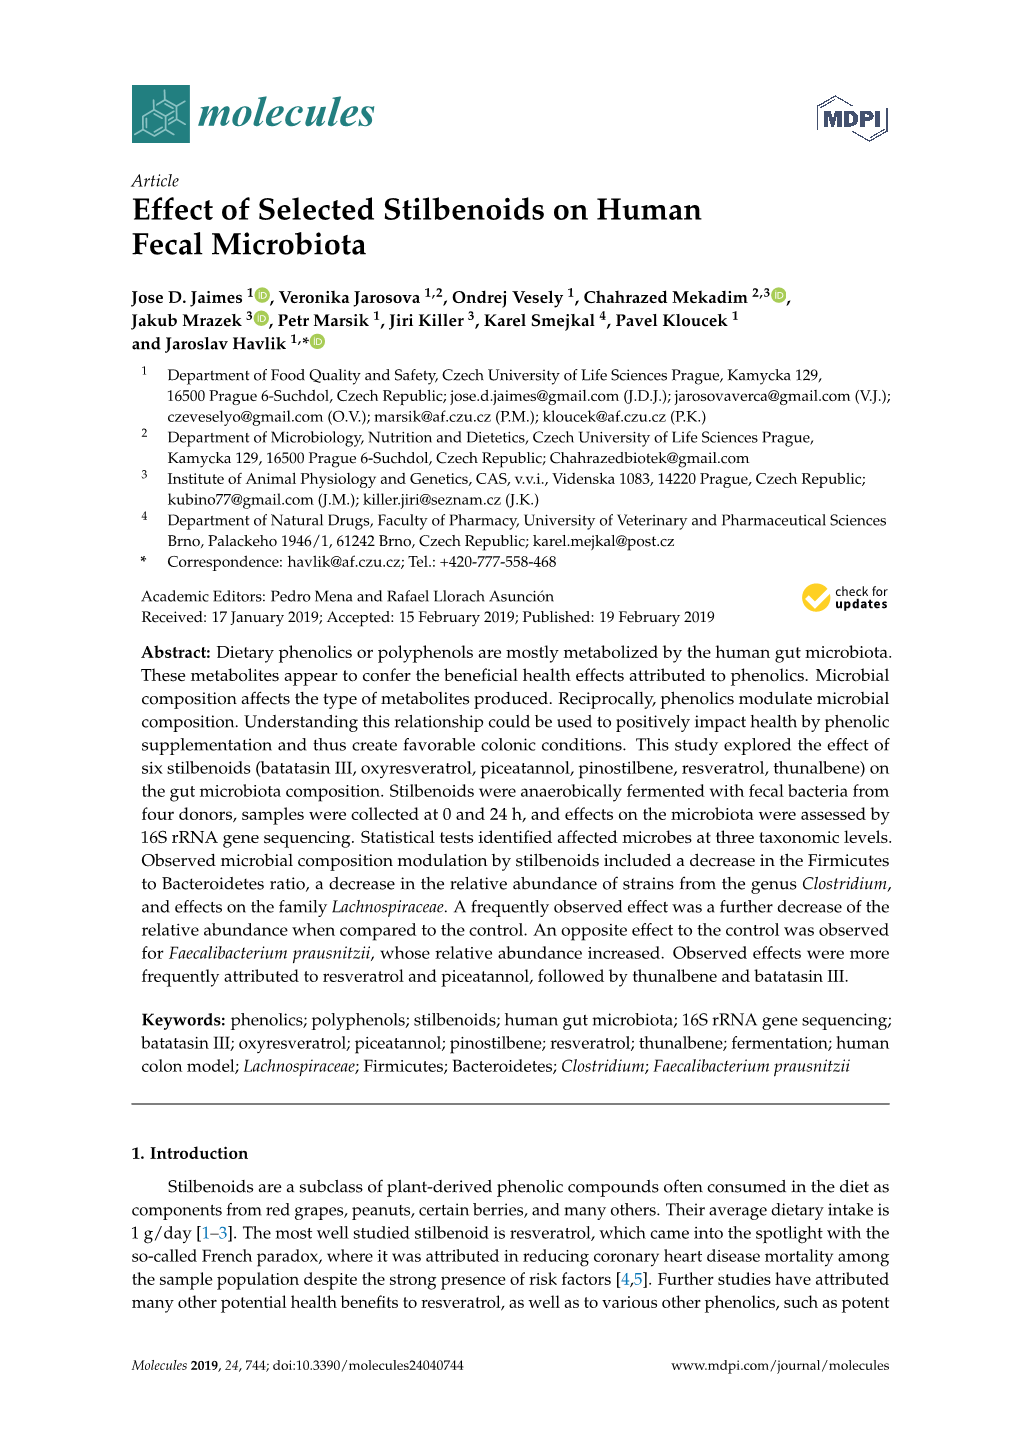 Effect of Selected Stilbenoids on Human Fecal Microbiota